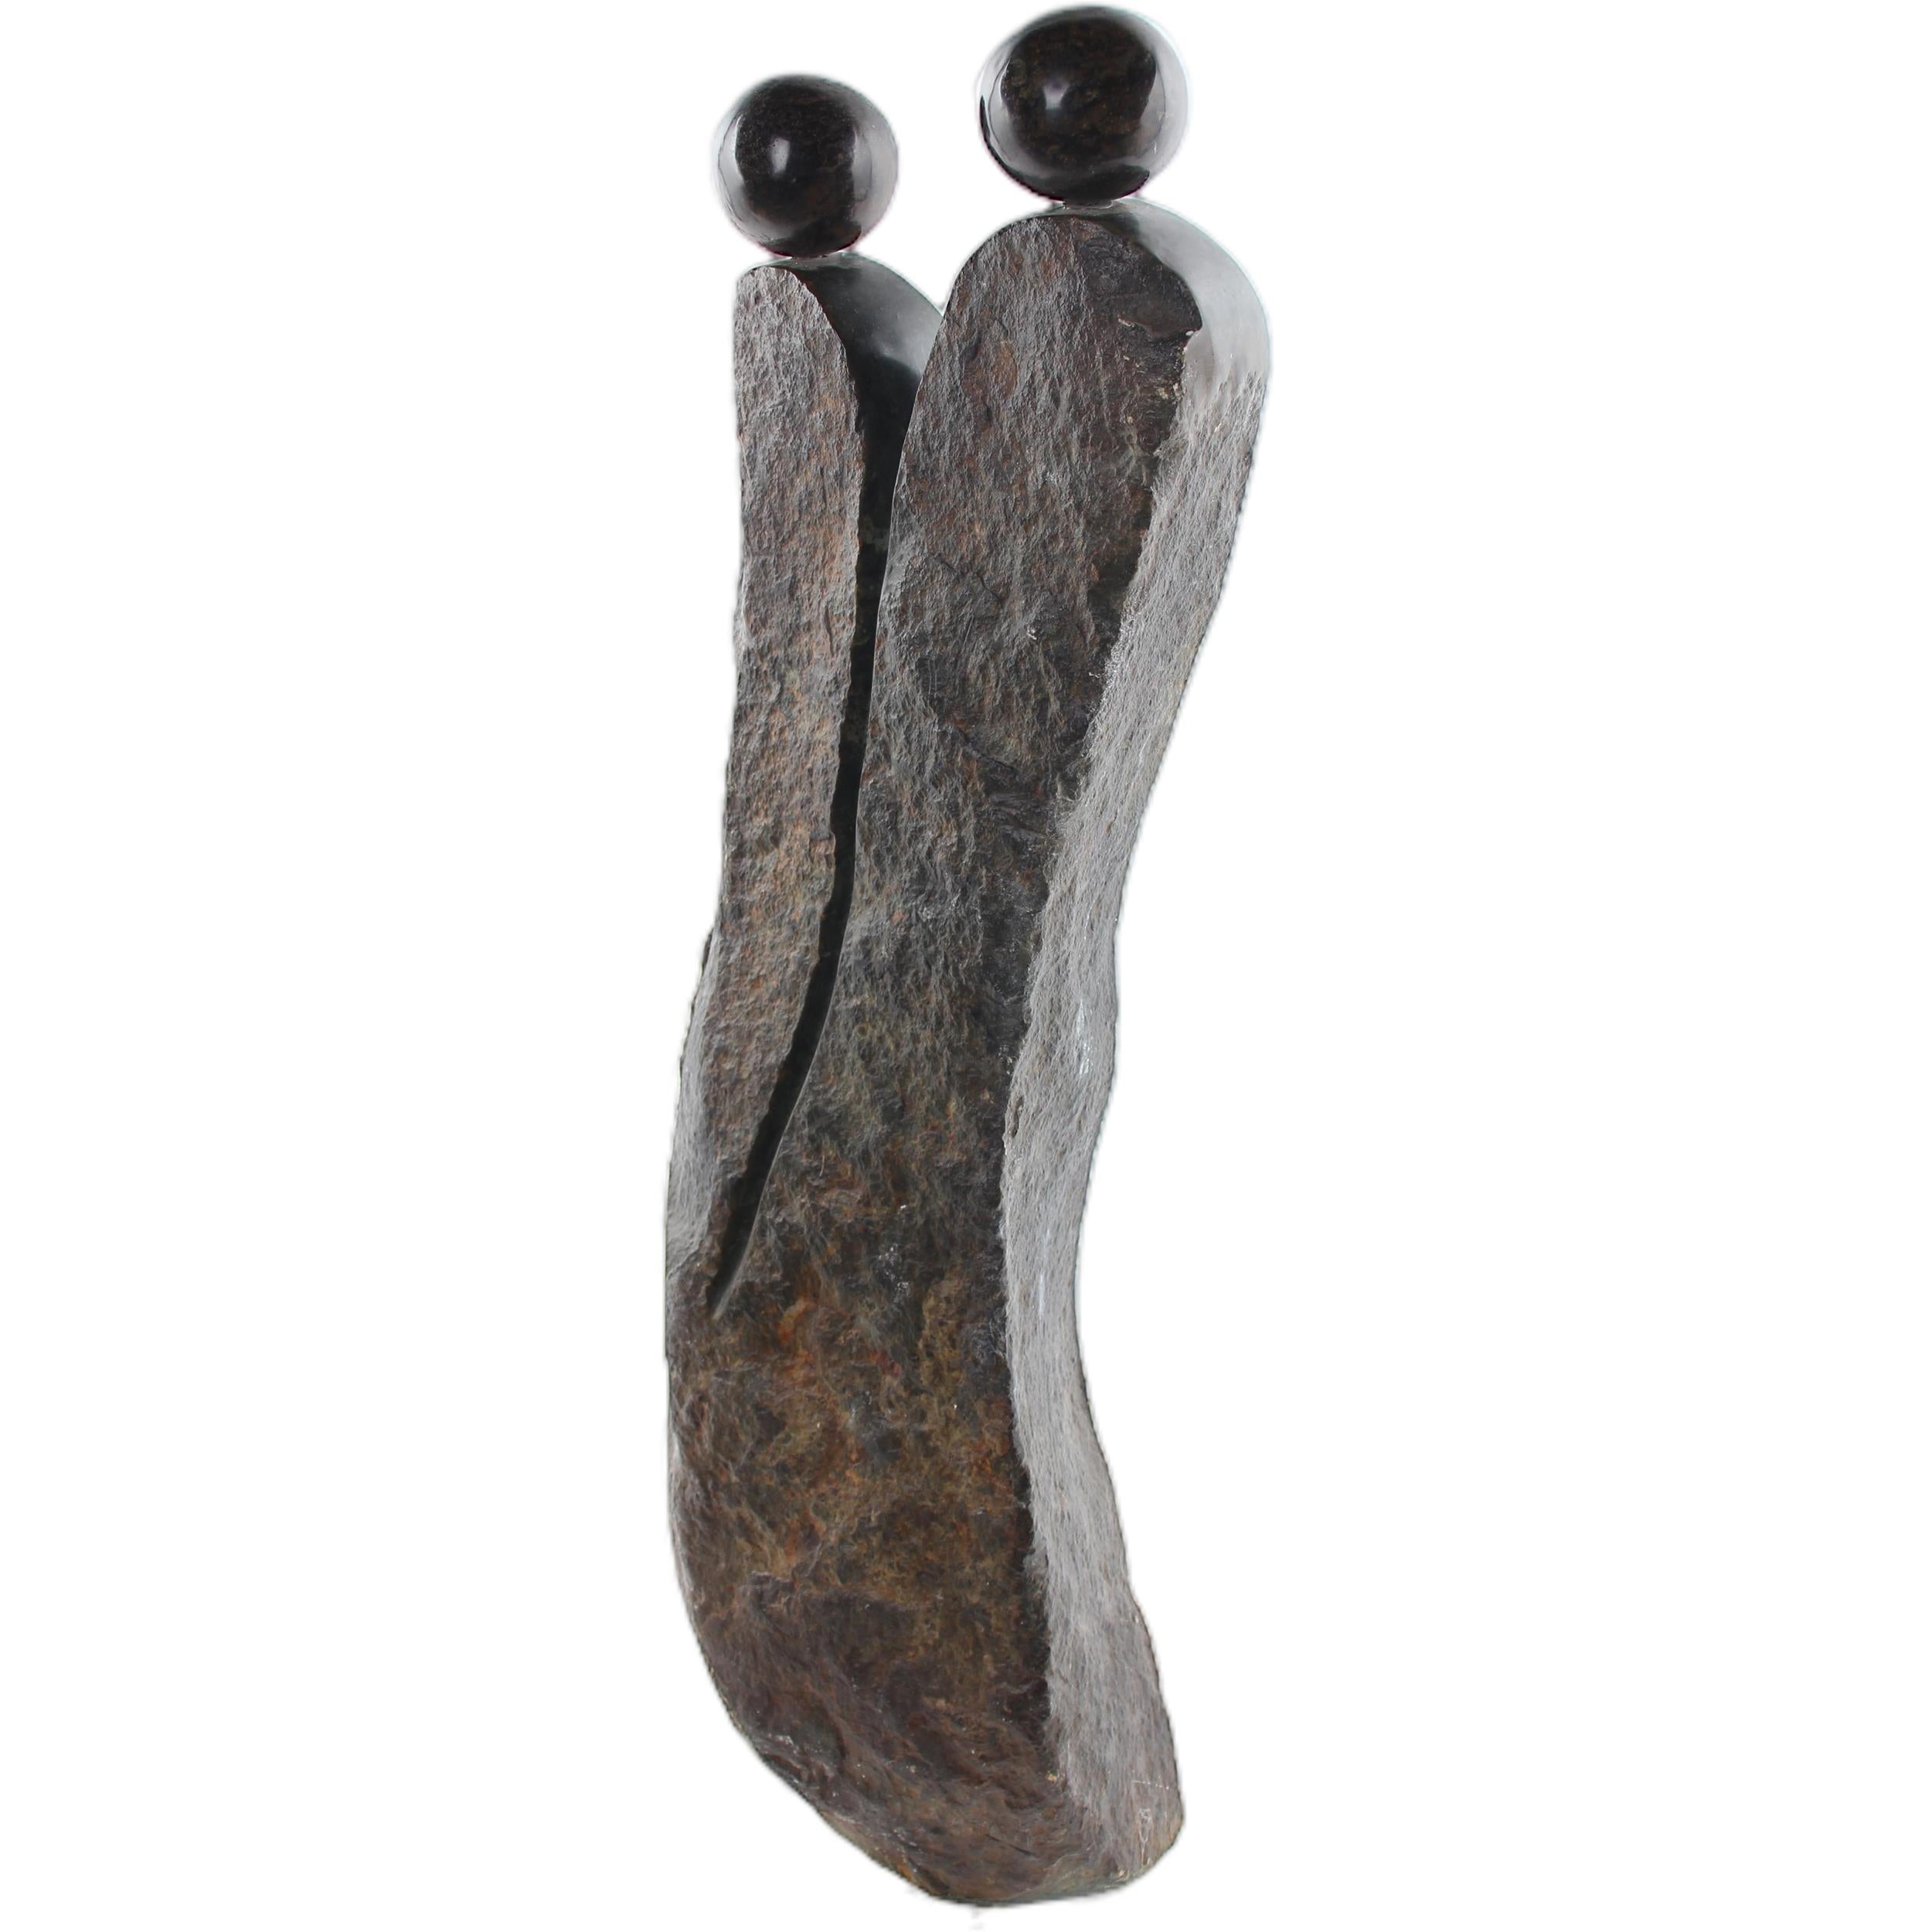 Shona Tribe Opal Stone Lovers ~38.2" Tall - Lovers